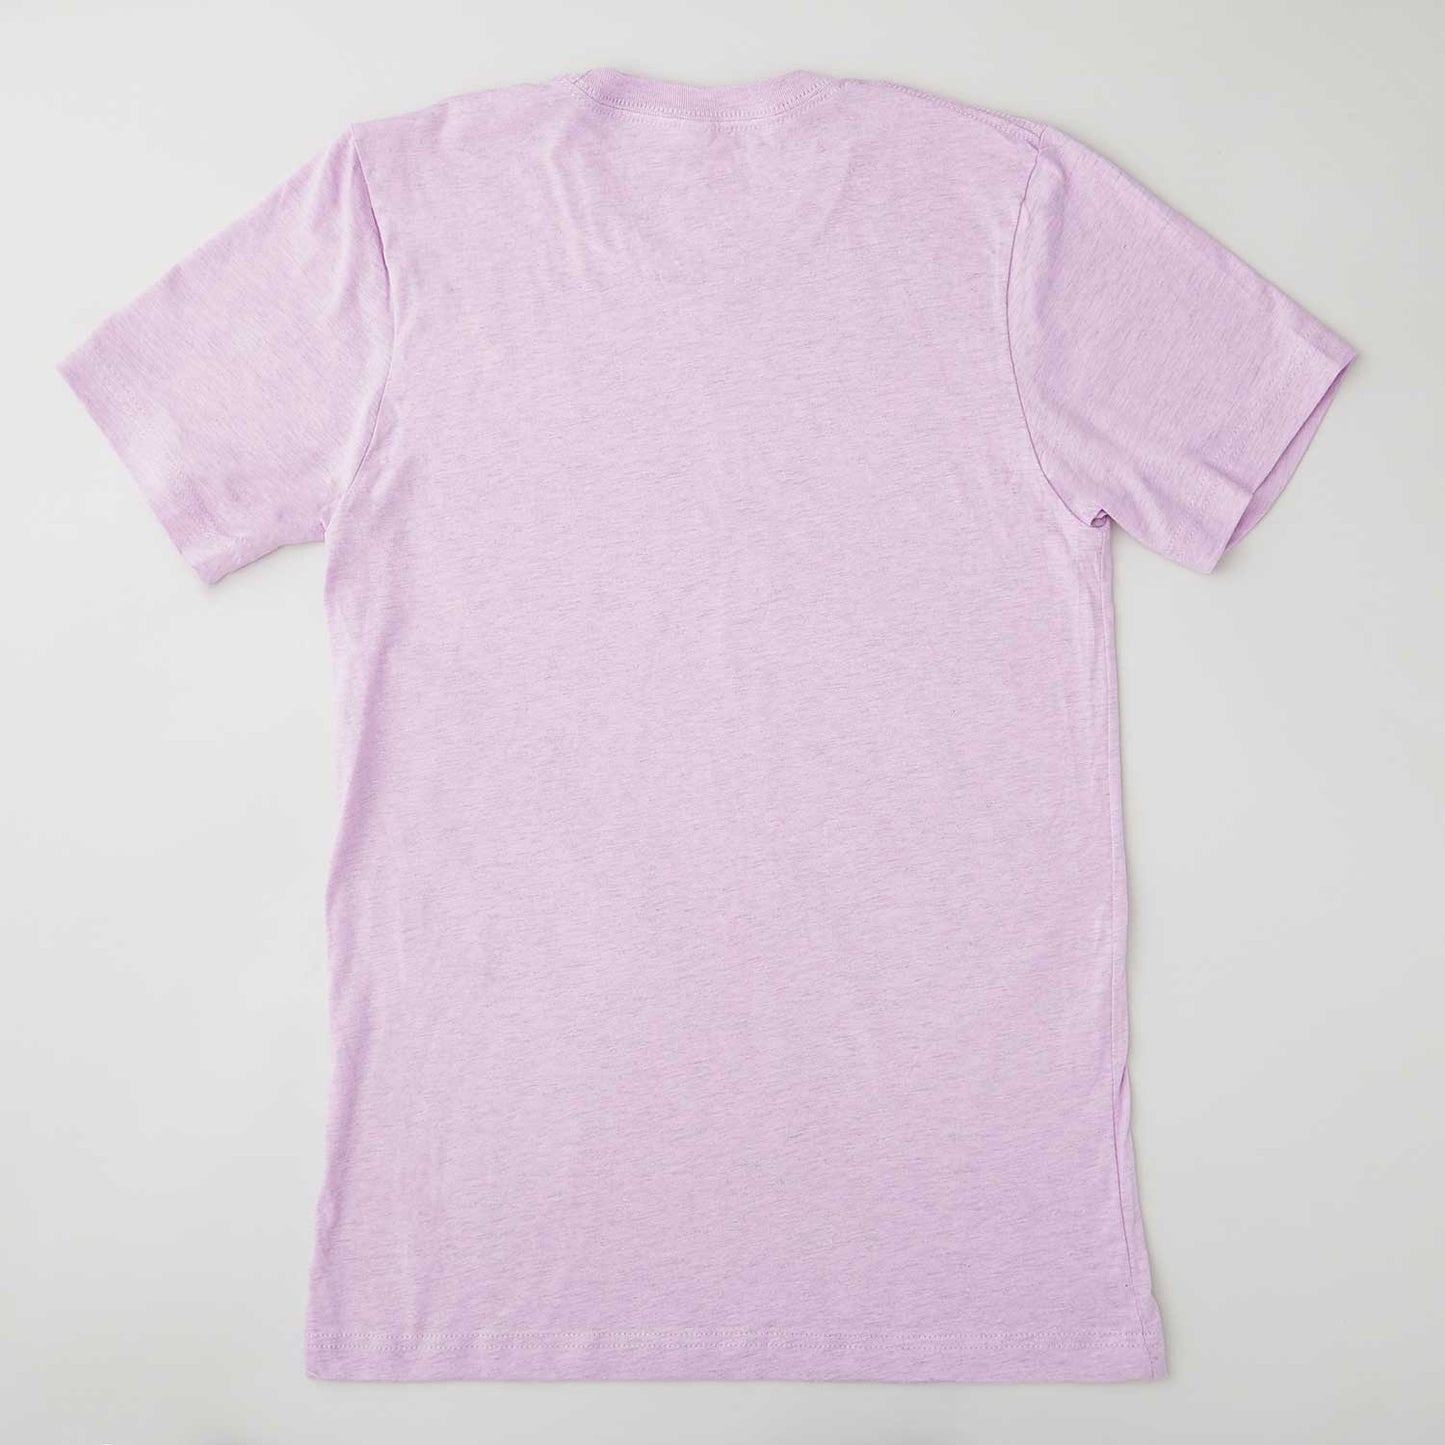 Quiltmaker T-shirt - Heather Prism Lilac - 2XL Alternative View #1